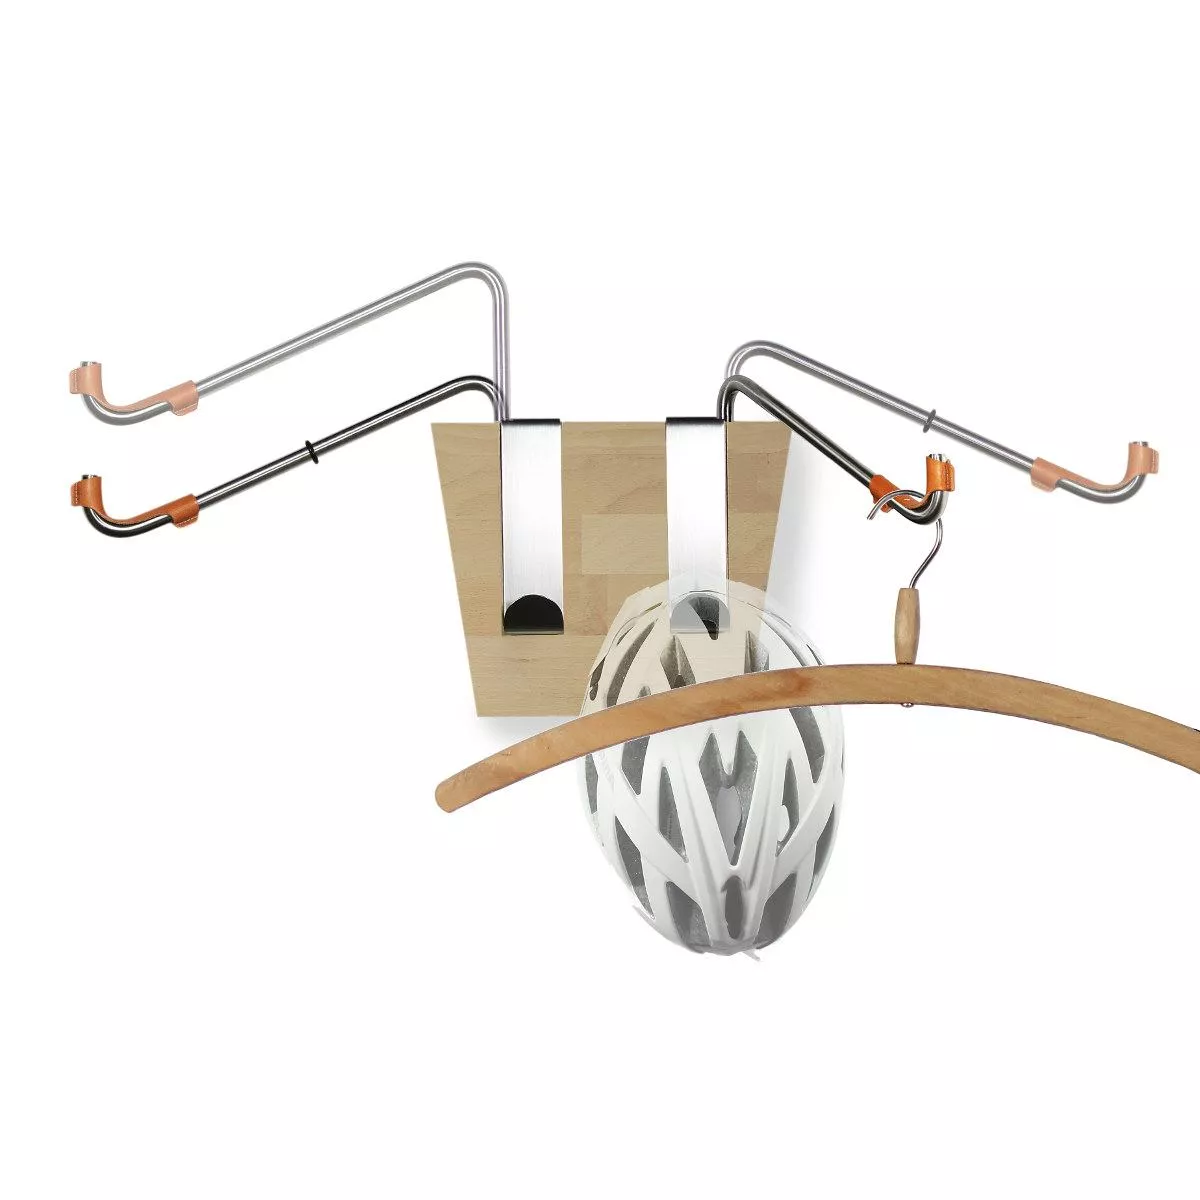 Bike holder, oak wood version